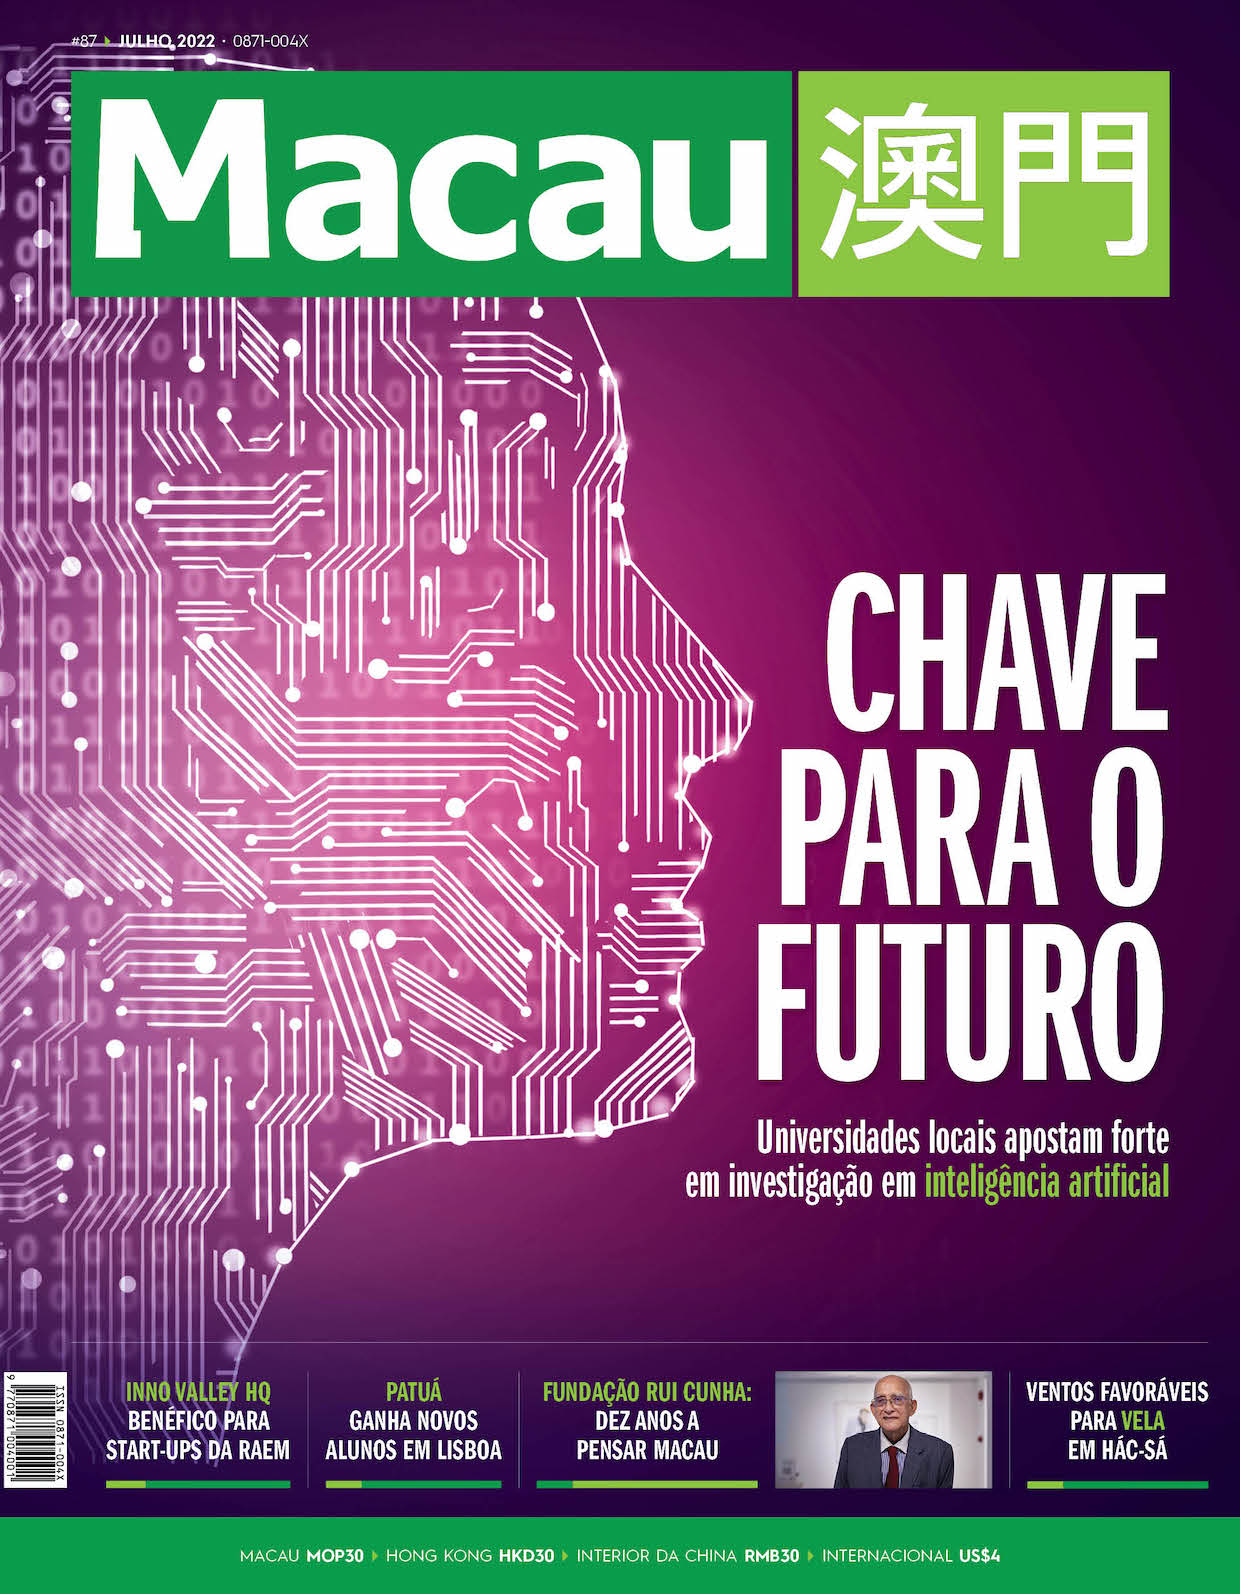 revista MACAU 78 by Revista Macau - Issuu